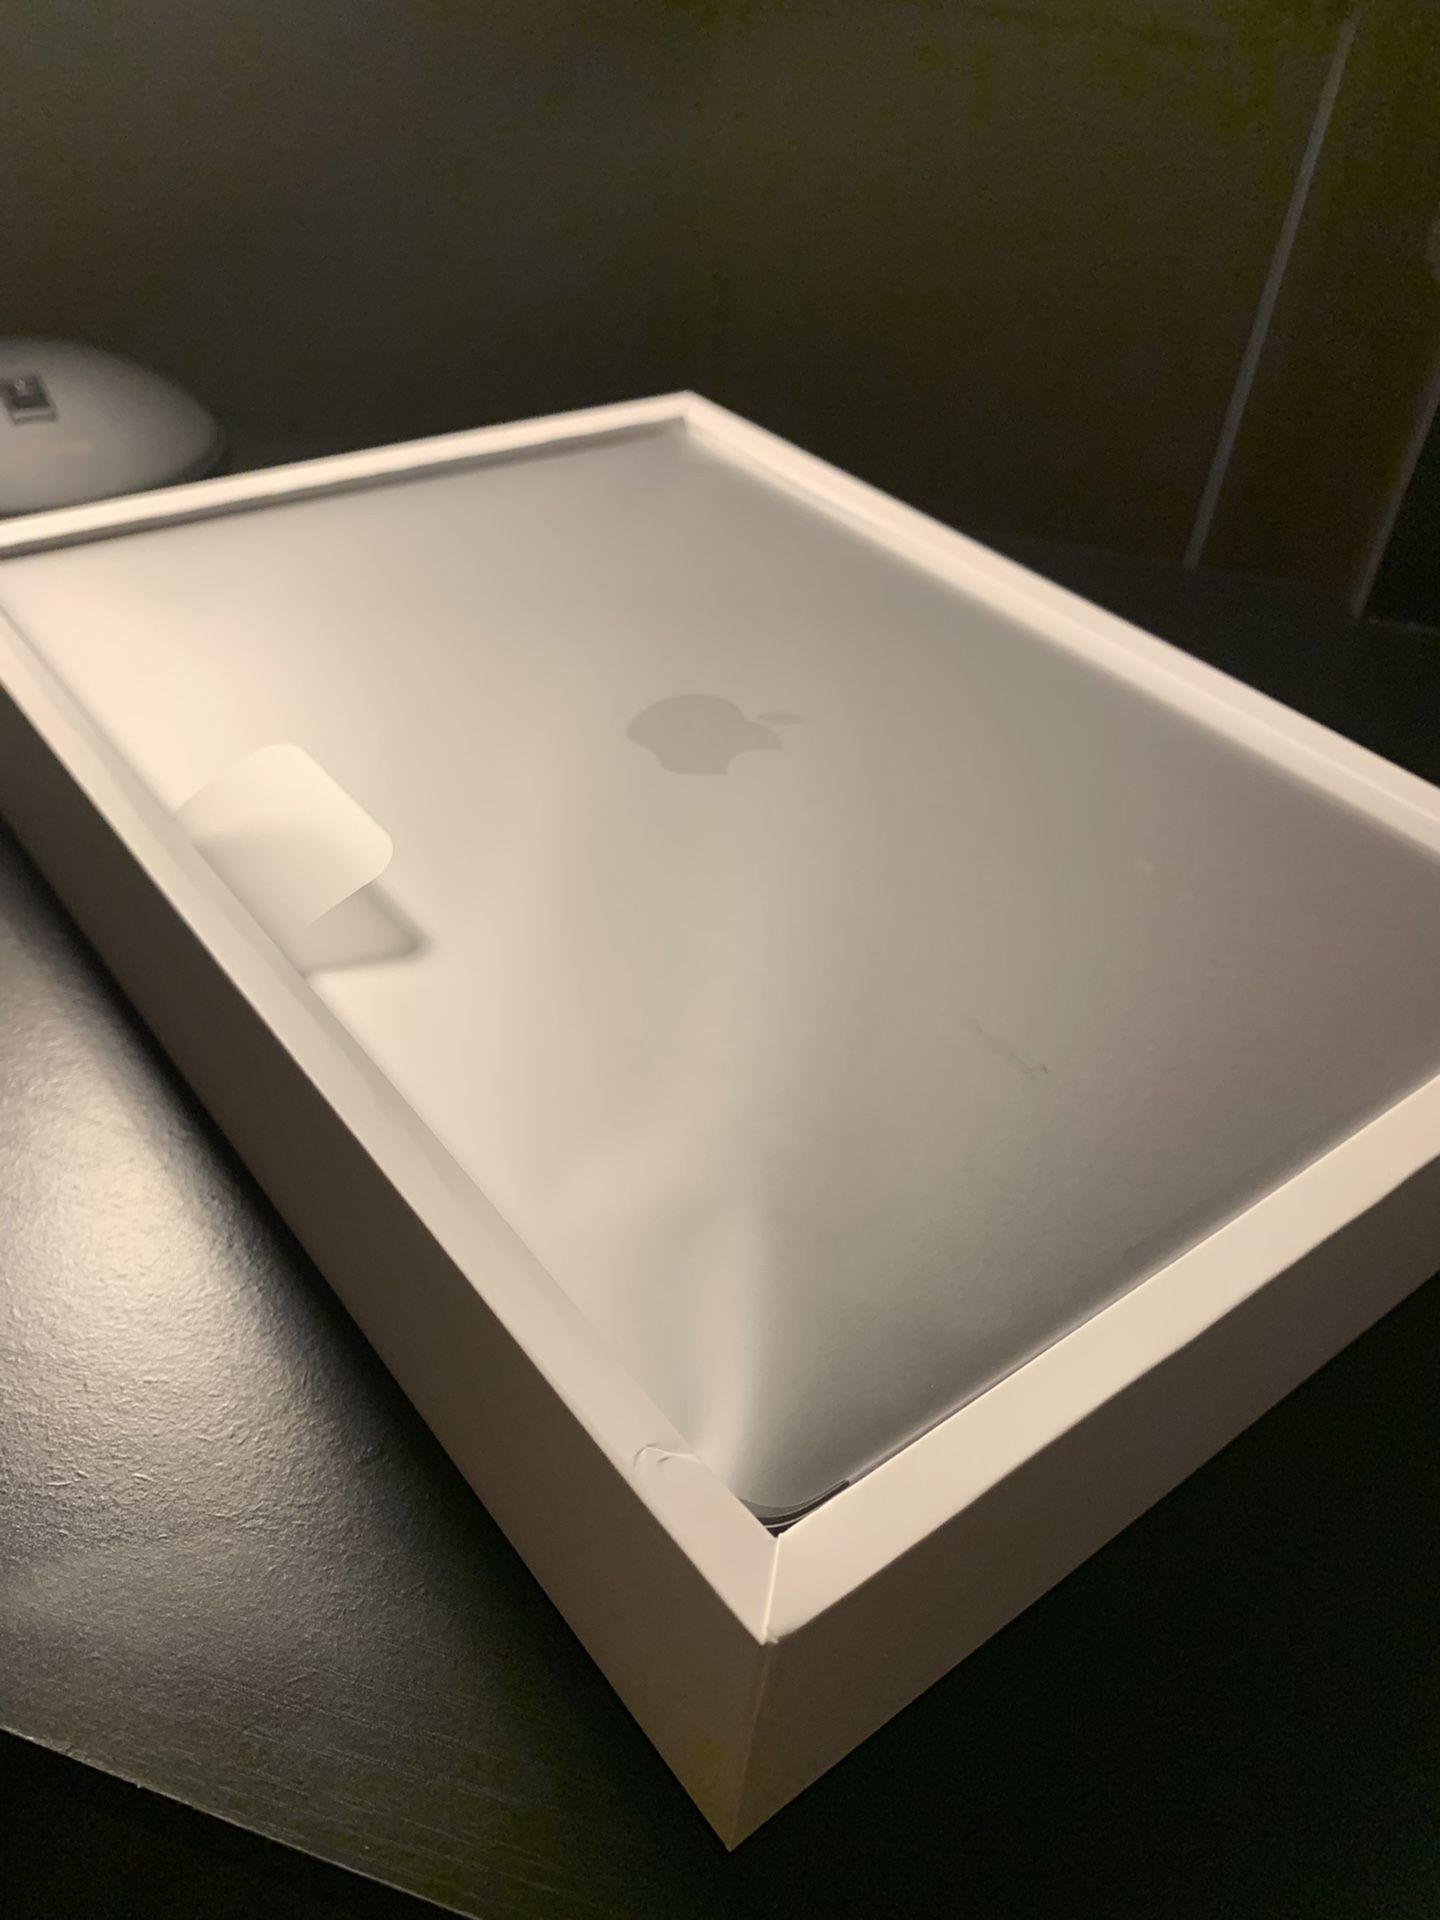 New Apple MacBook Pro 2020 (13-inch, 16GB RAM, 512GB SSD, Core i5 2.0 GHz, Magic Keyboard ) - Space Gray